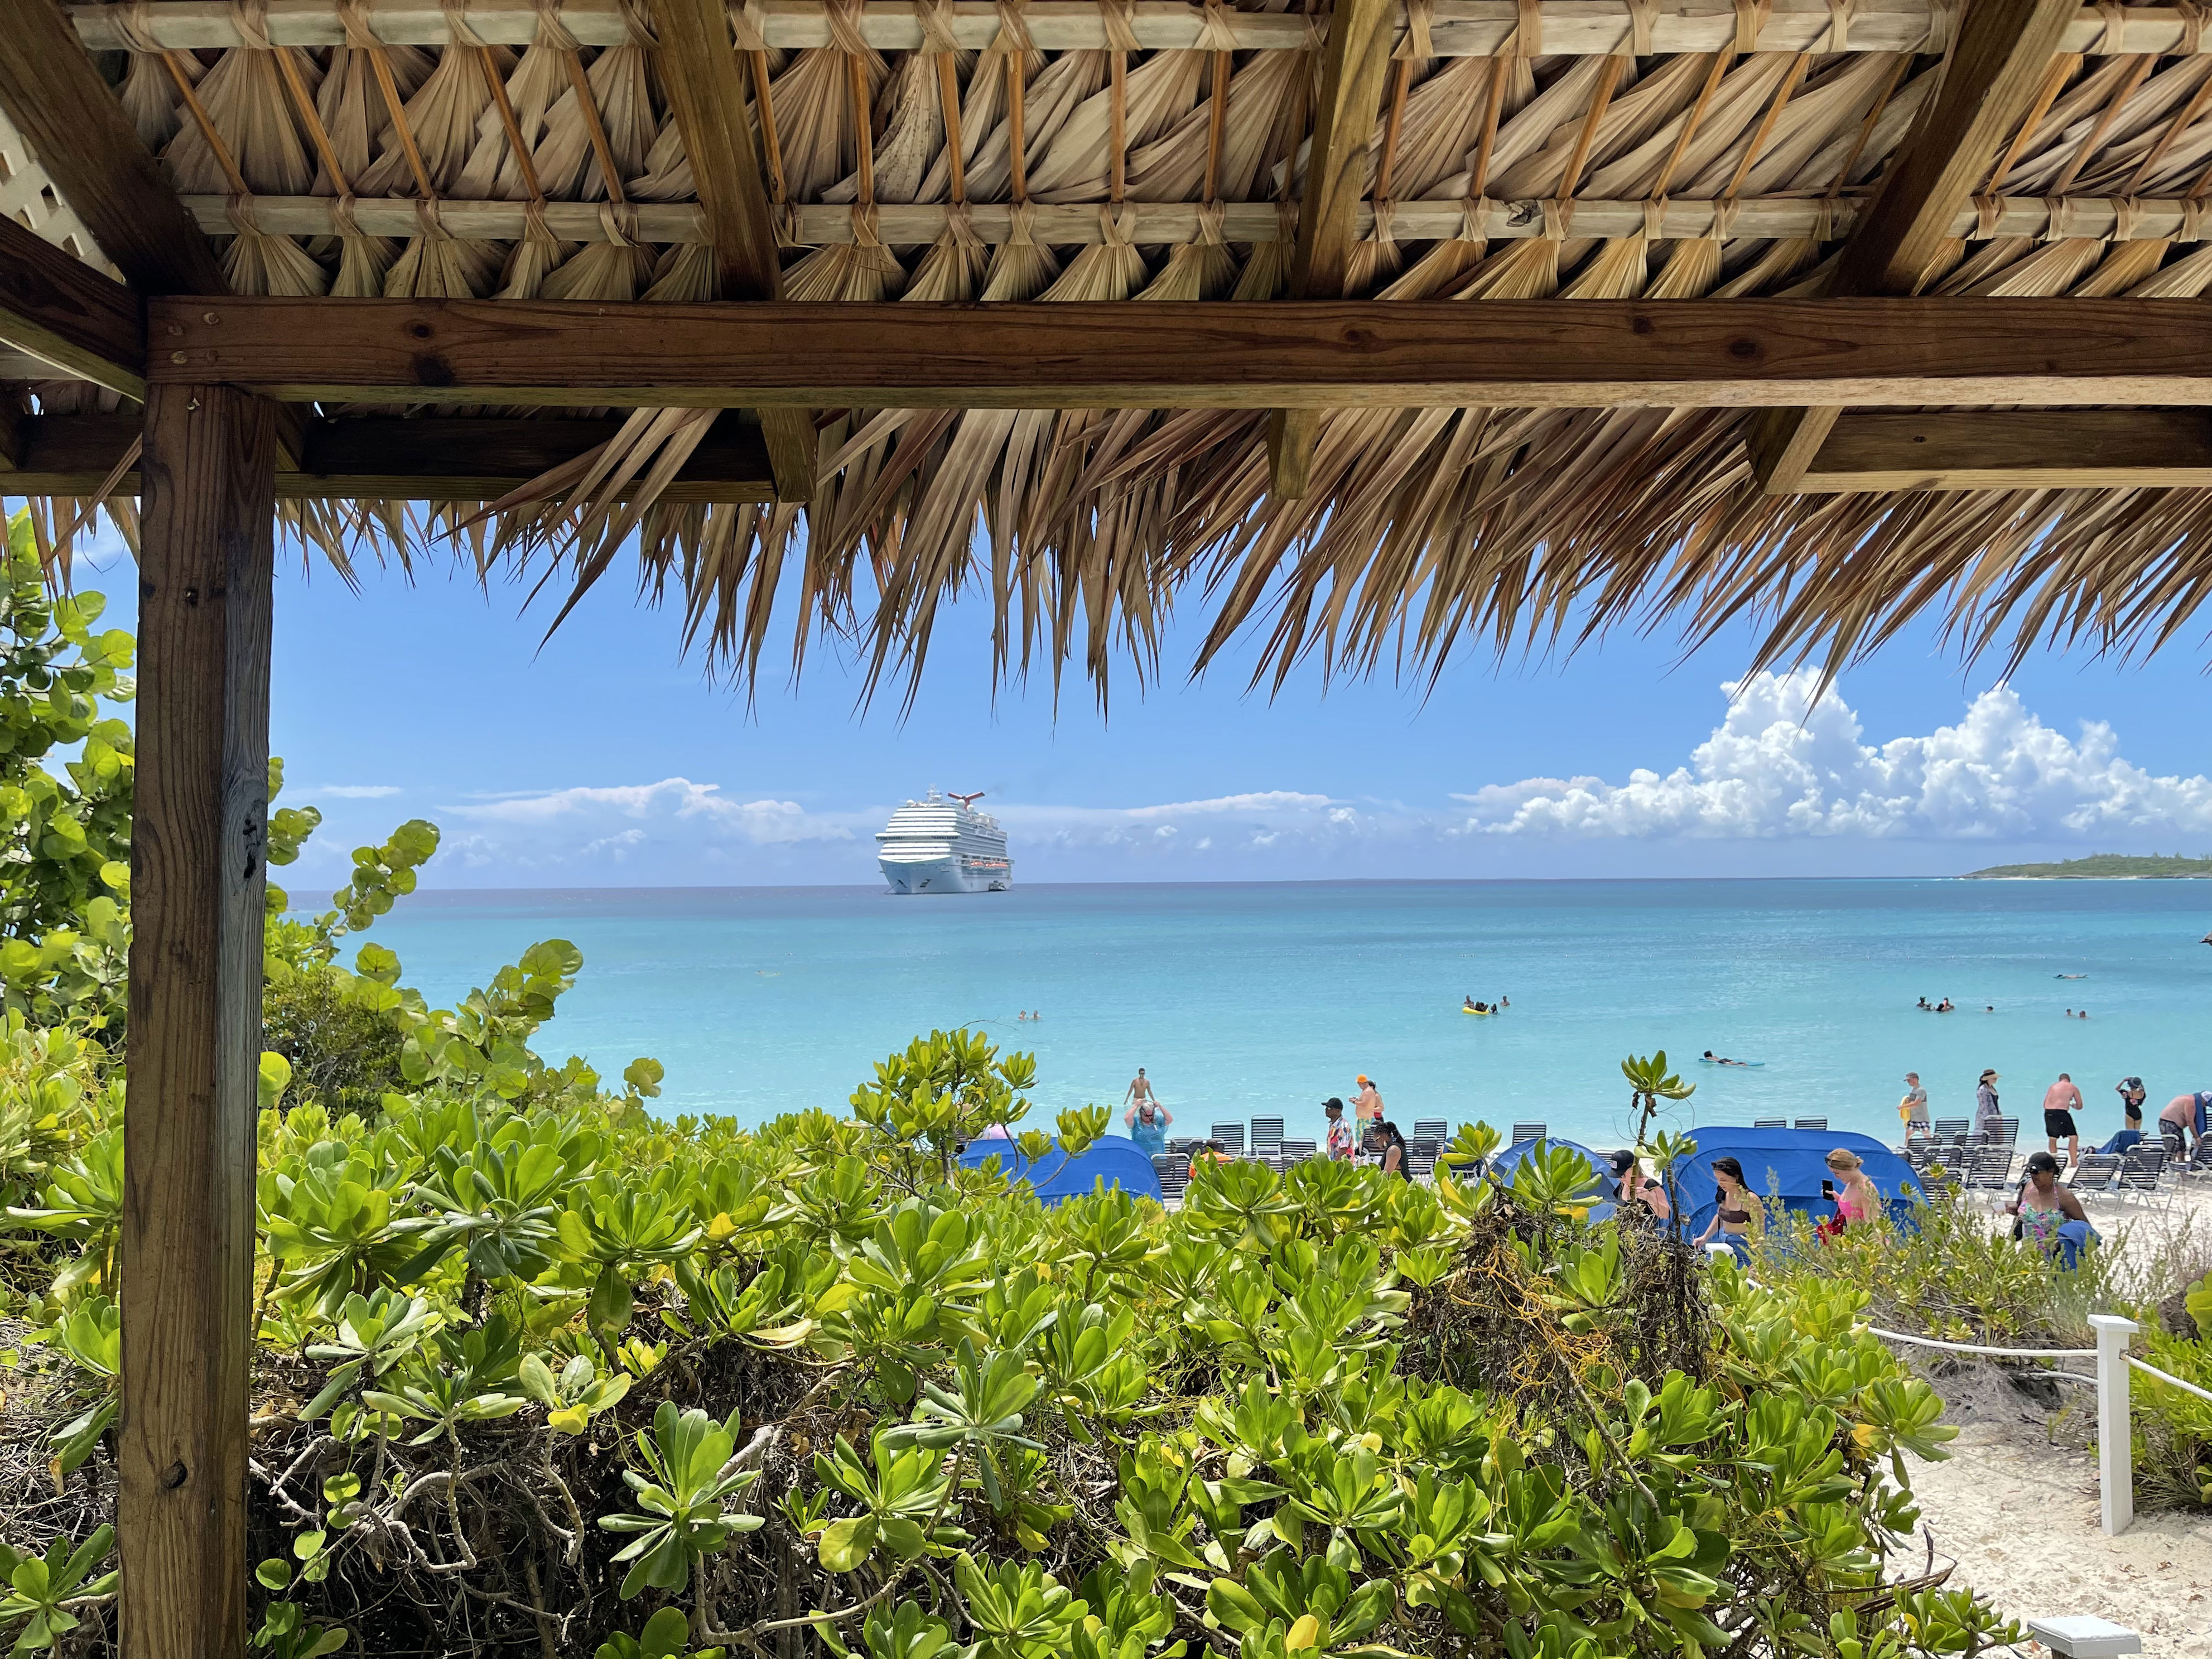 Carnival ship anchored in the distance at half moon cay Bahamas